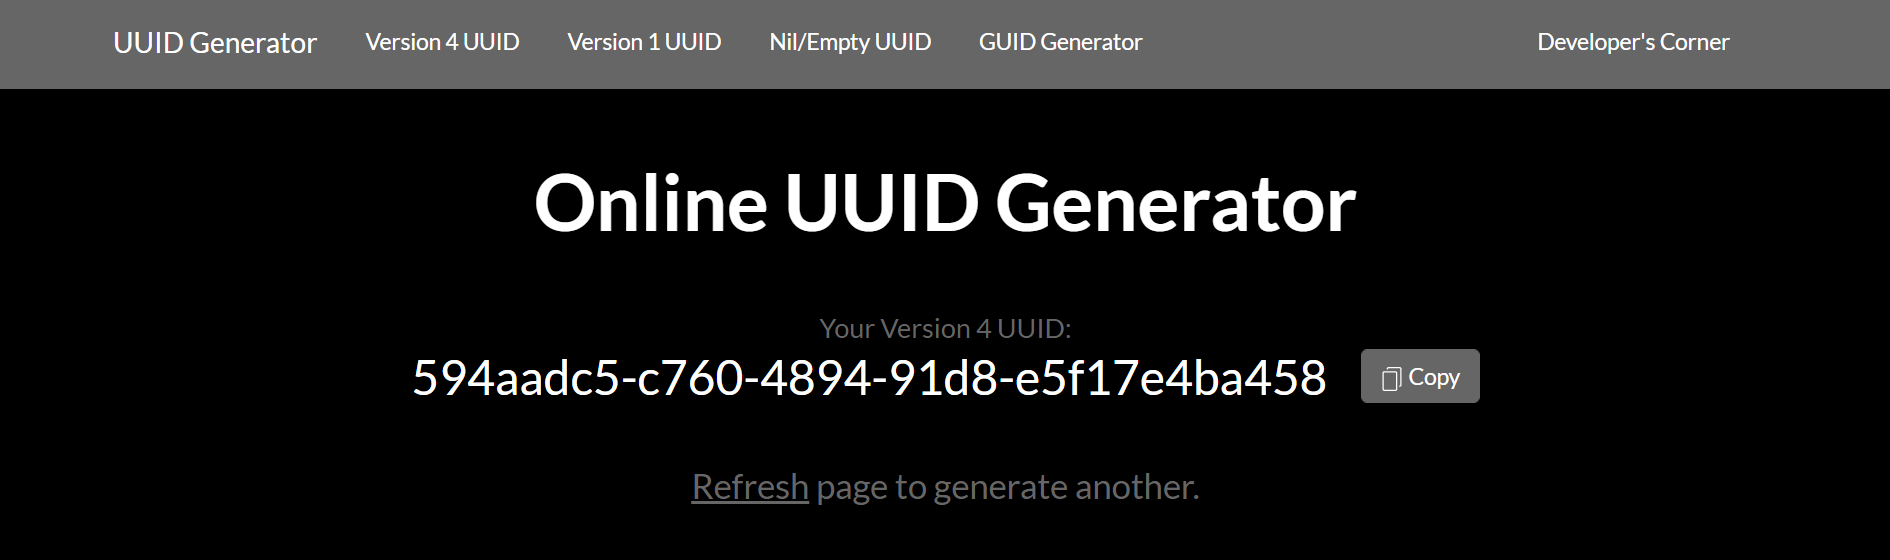 Image of UUIDGenerator.net home screen with a custom UUID generated